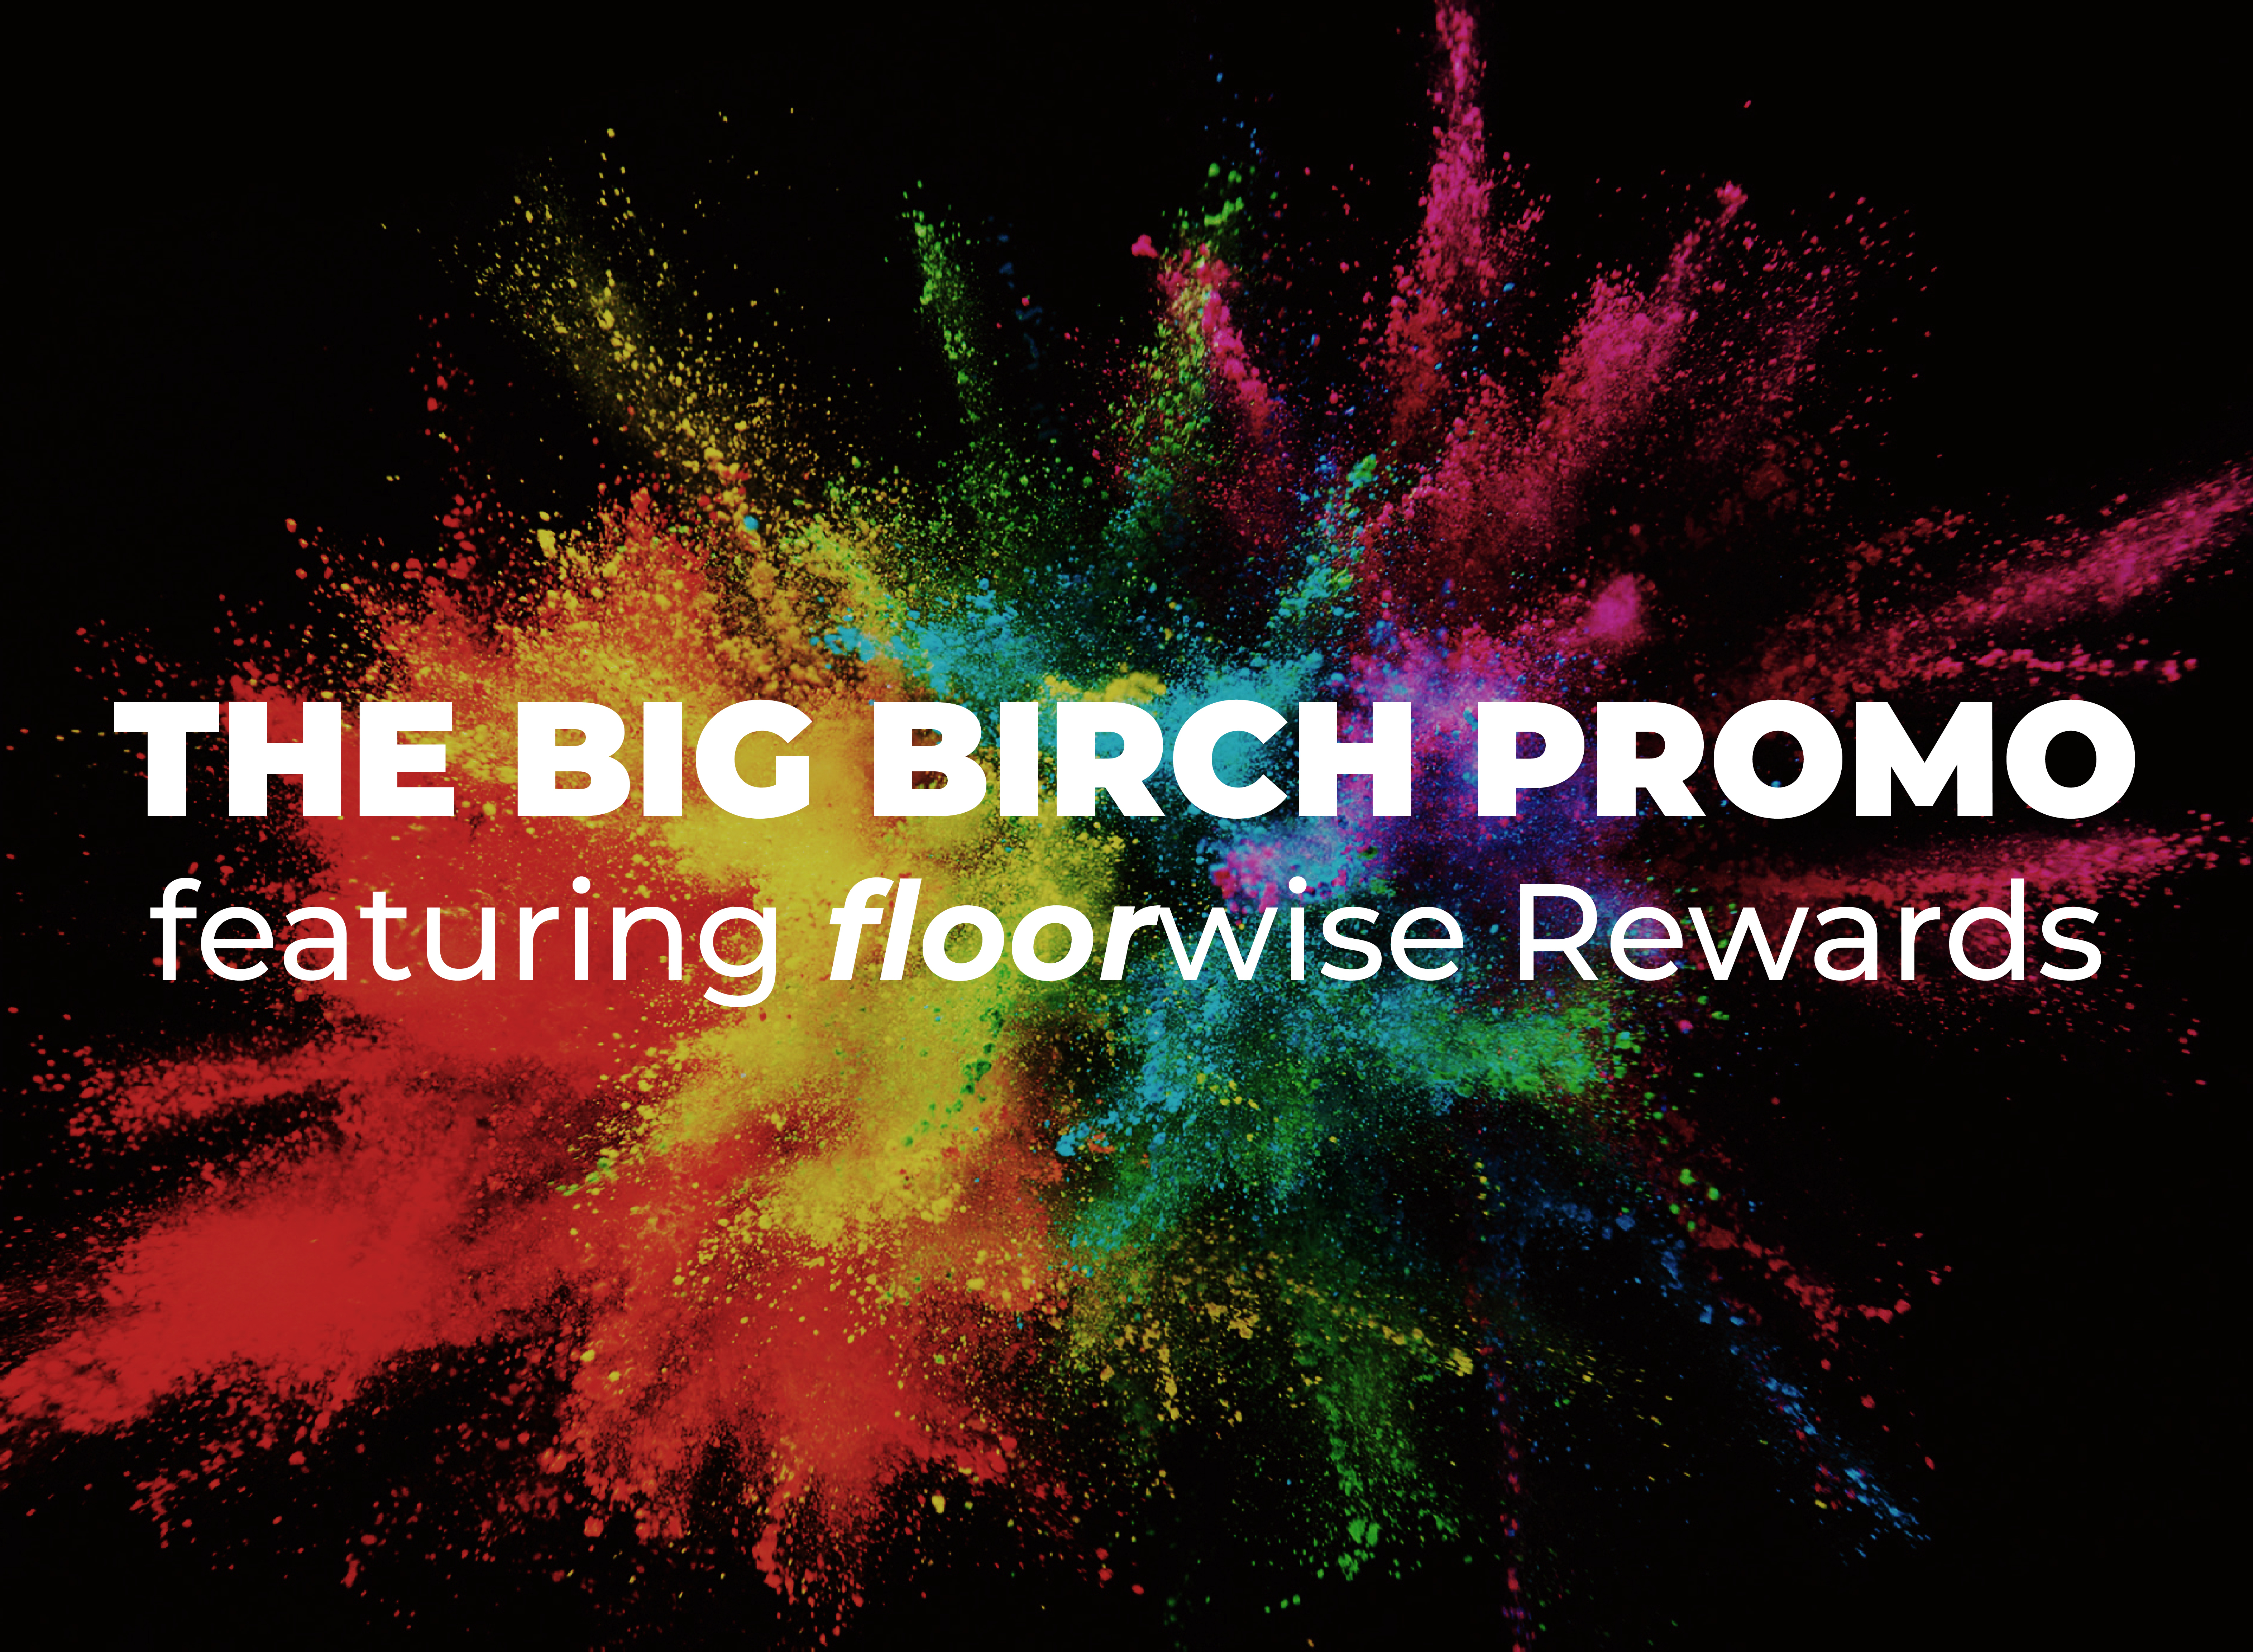 The Big Birch Promo, feat. Floorwise Rewards